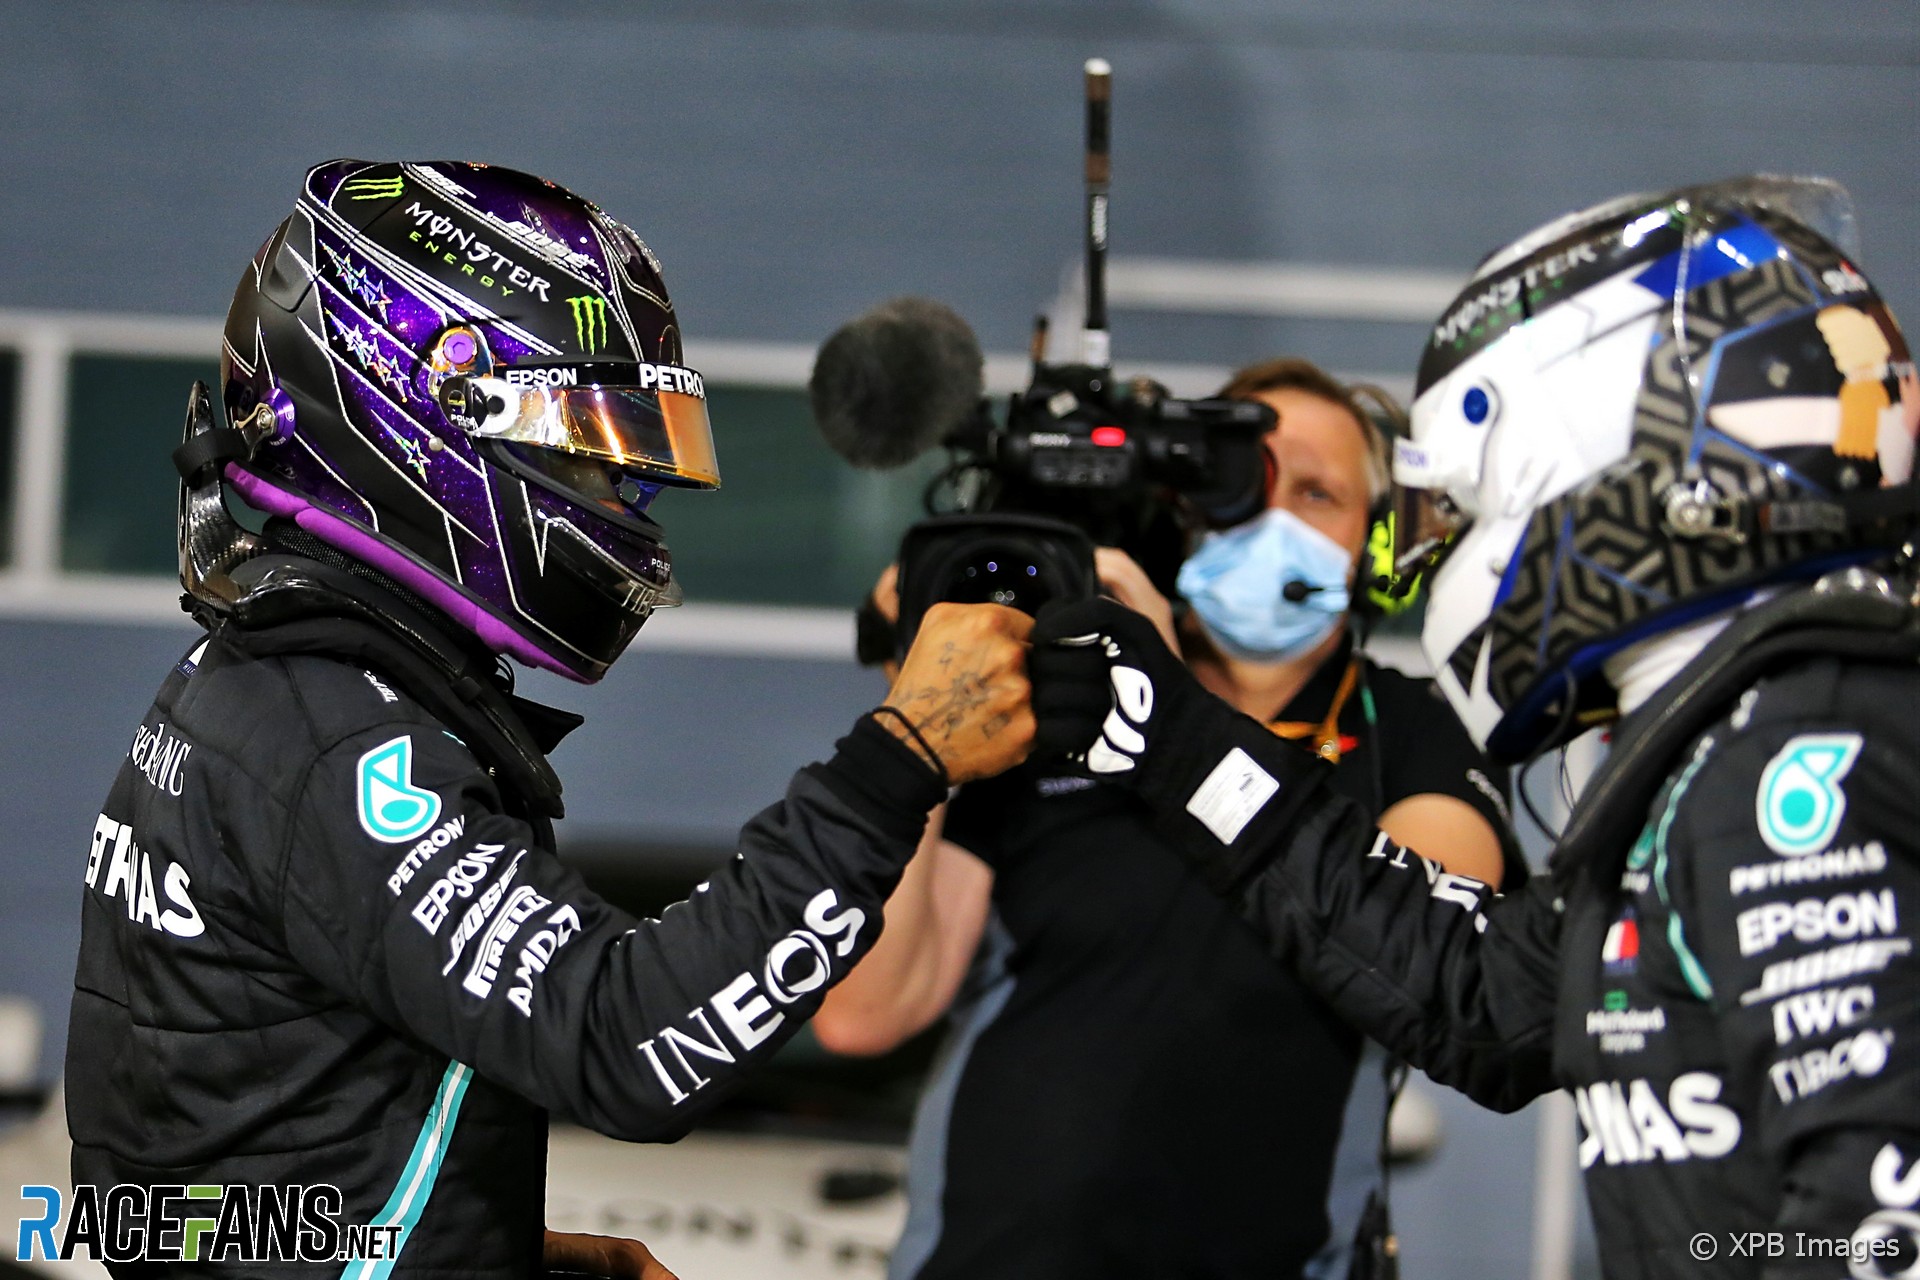 Lewis Hamilton, Mercedes, Bahrain International Circuit, 2020